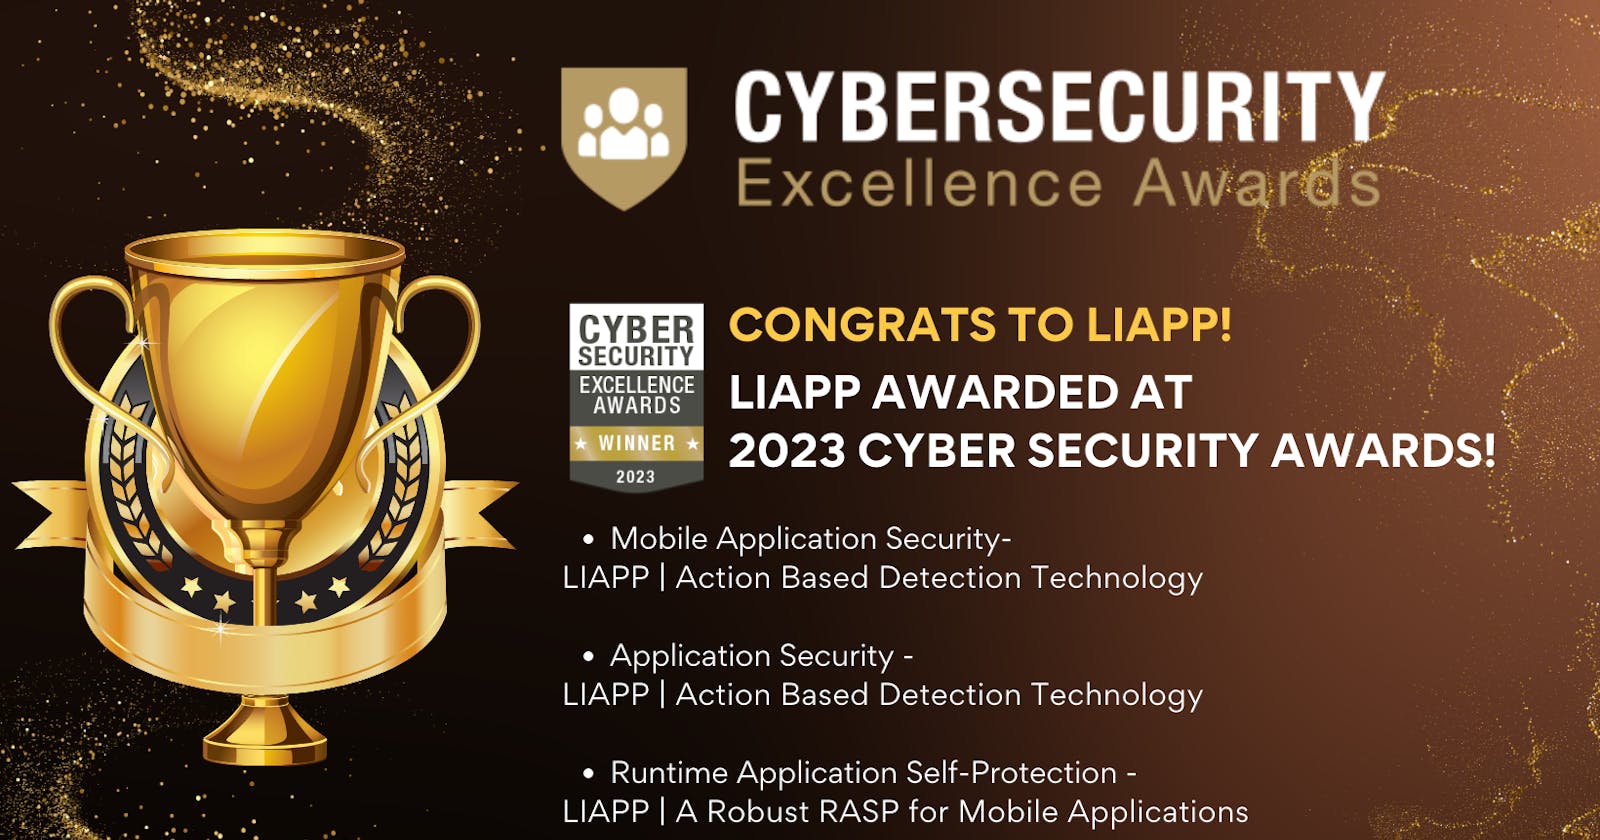 LIAPP has won an award in Cyber Security Awards 2023!